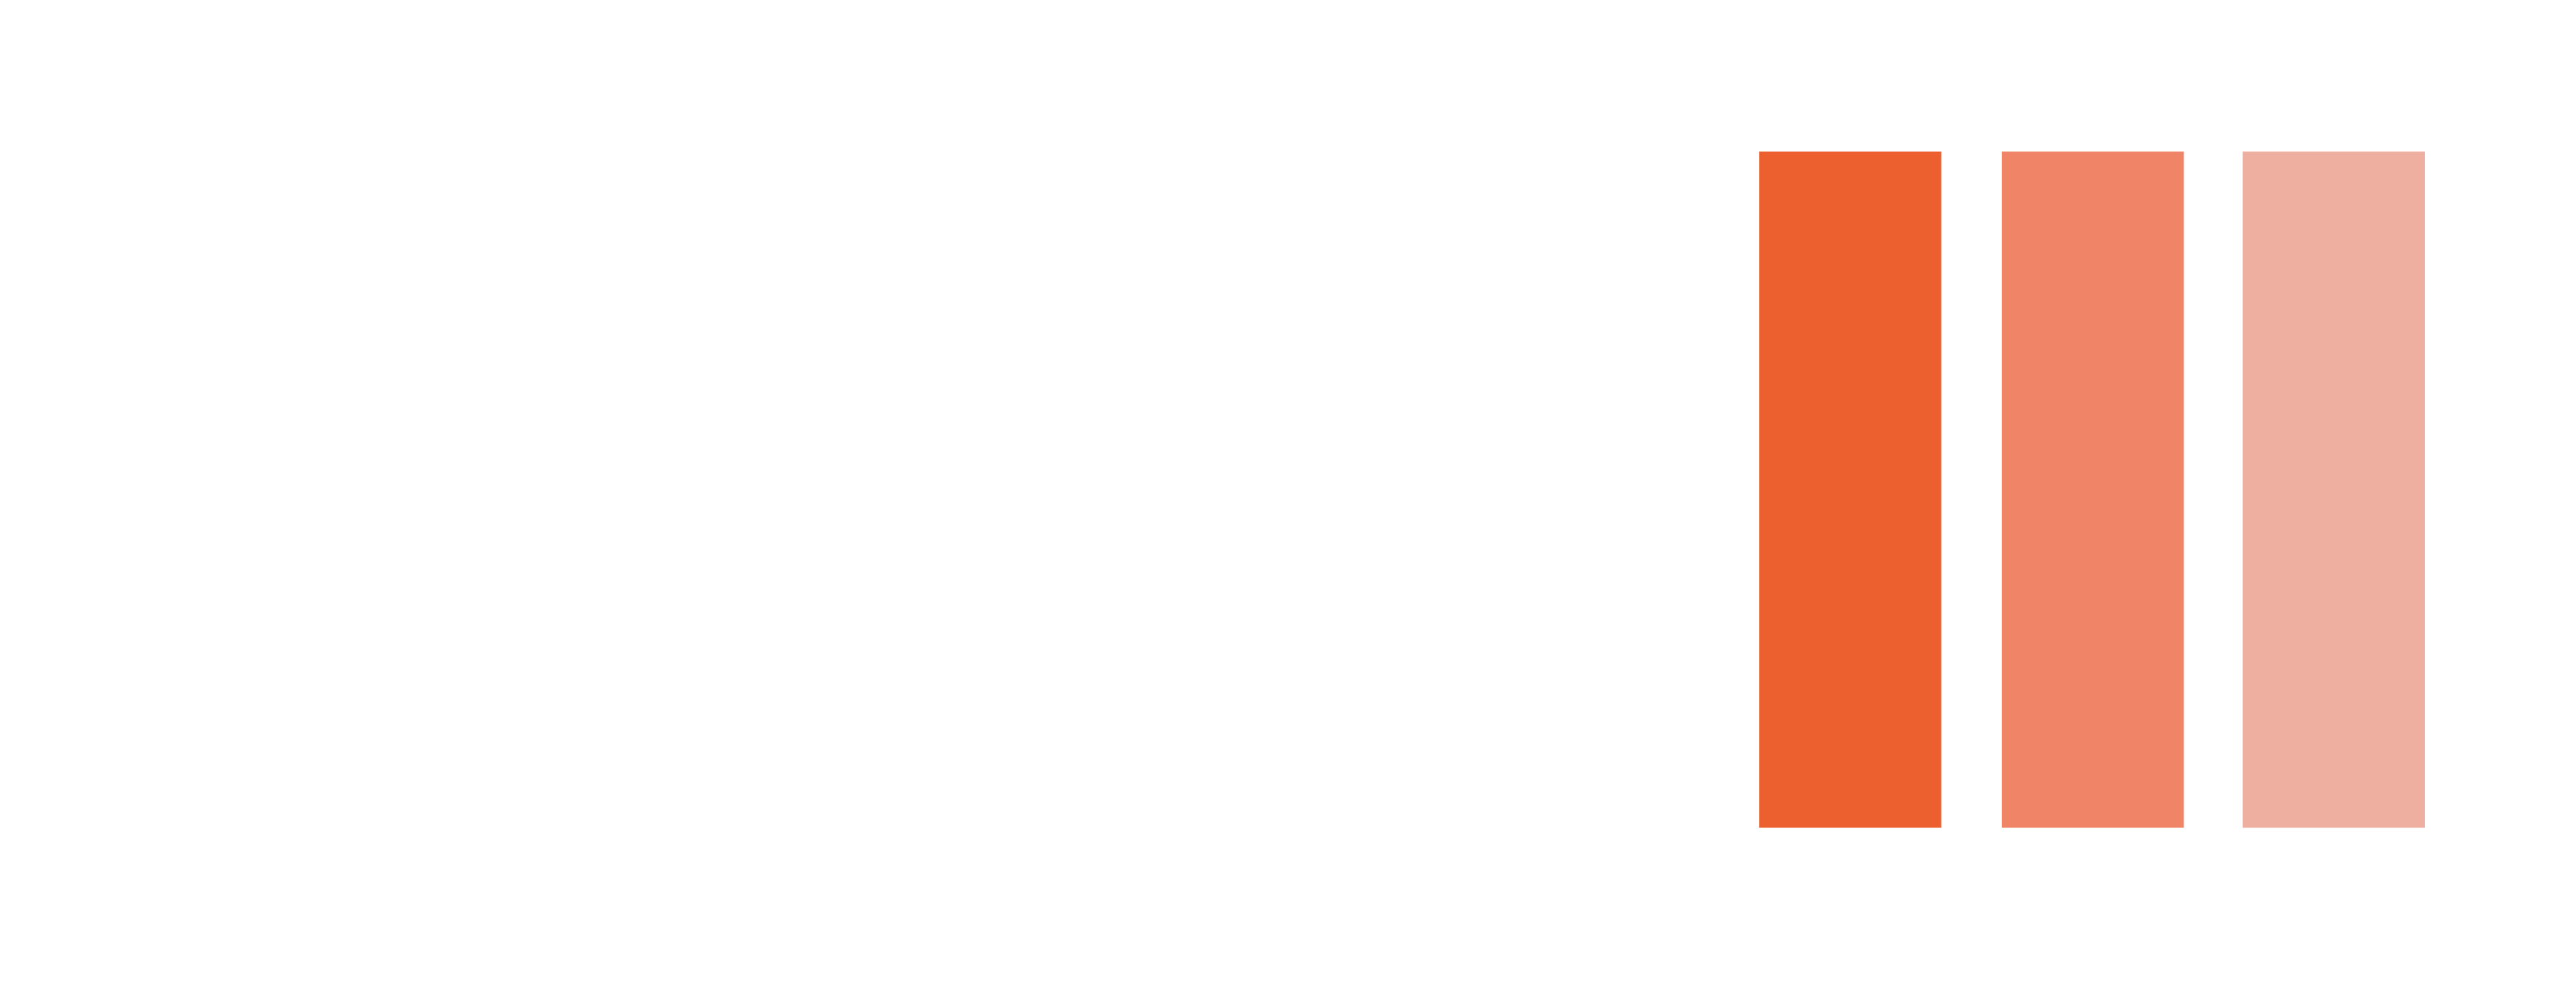 MGK BUILDING LOGO 3